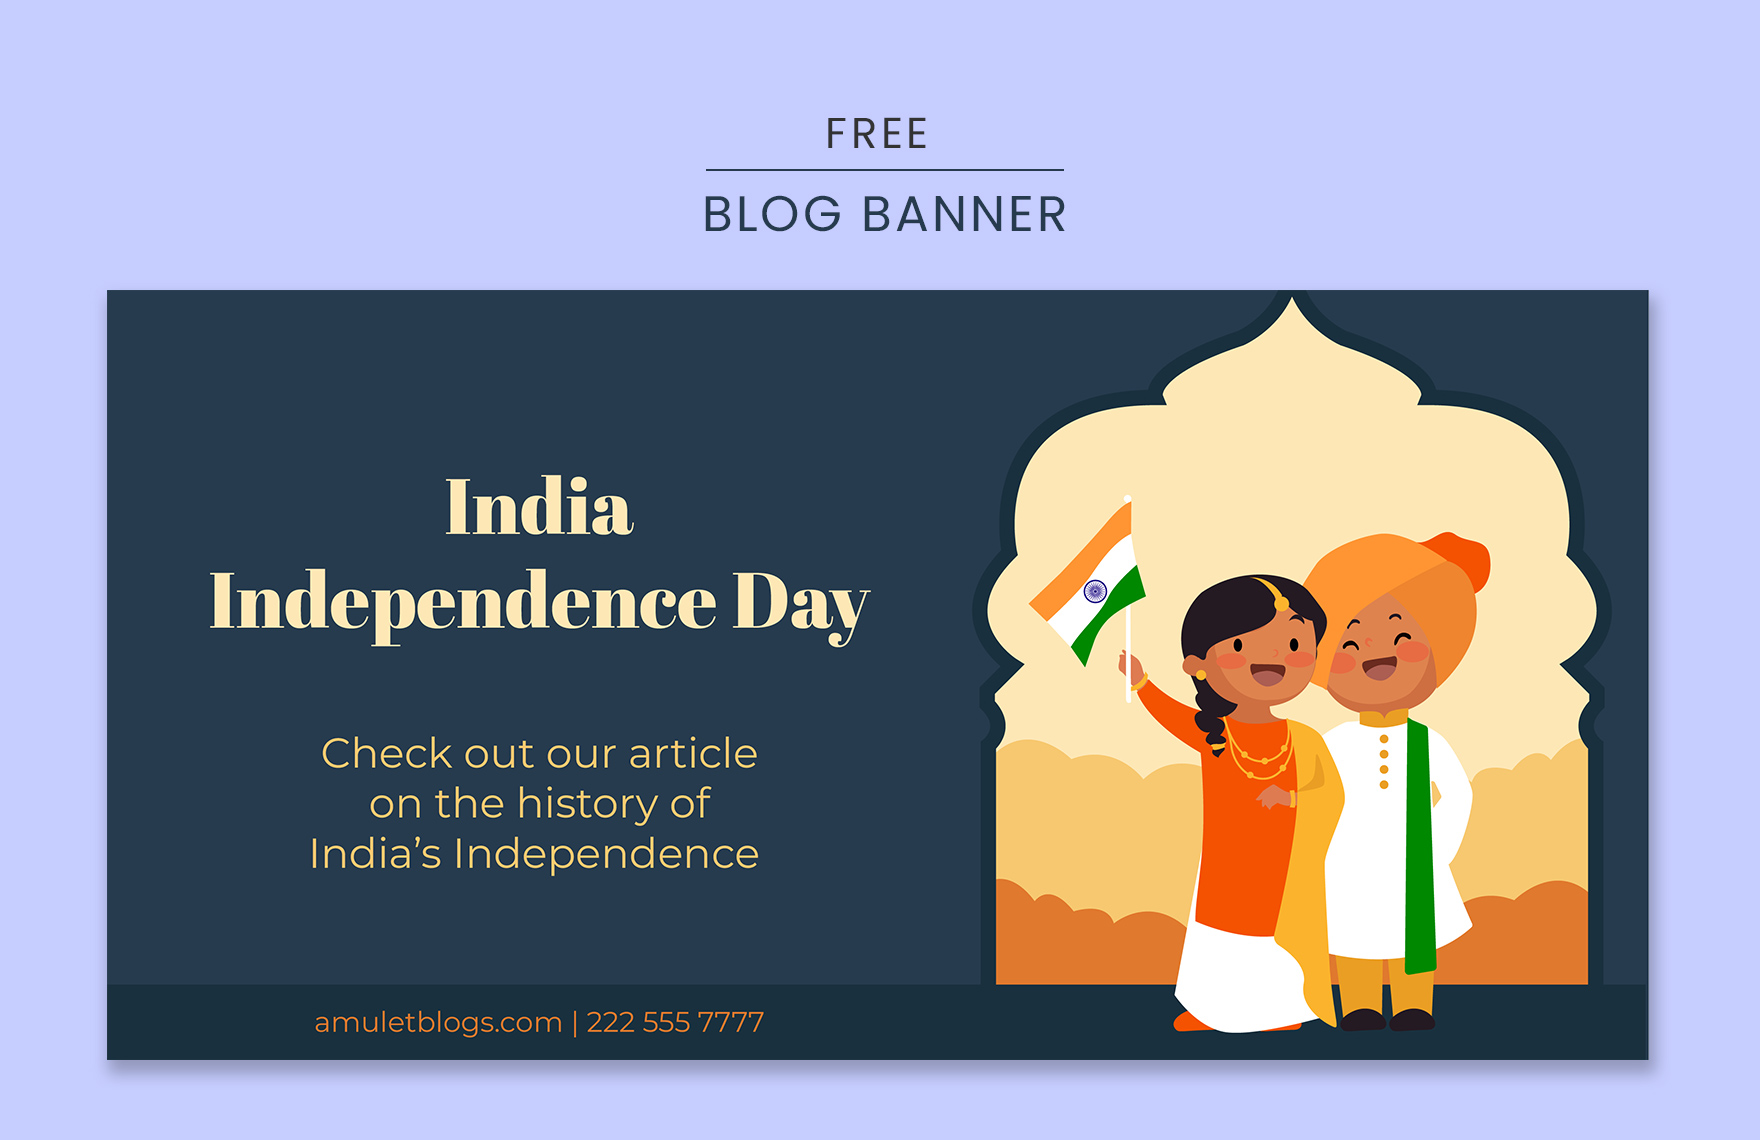 India Independence Day Blog Banner Template in PDF, Illustrator, SVG, JPEG